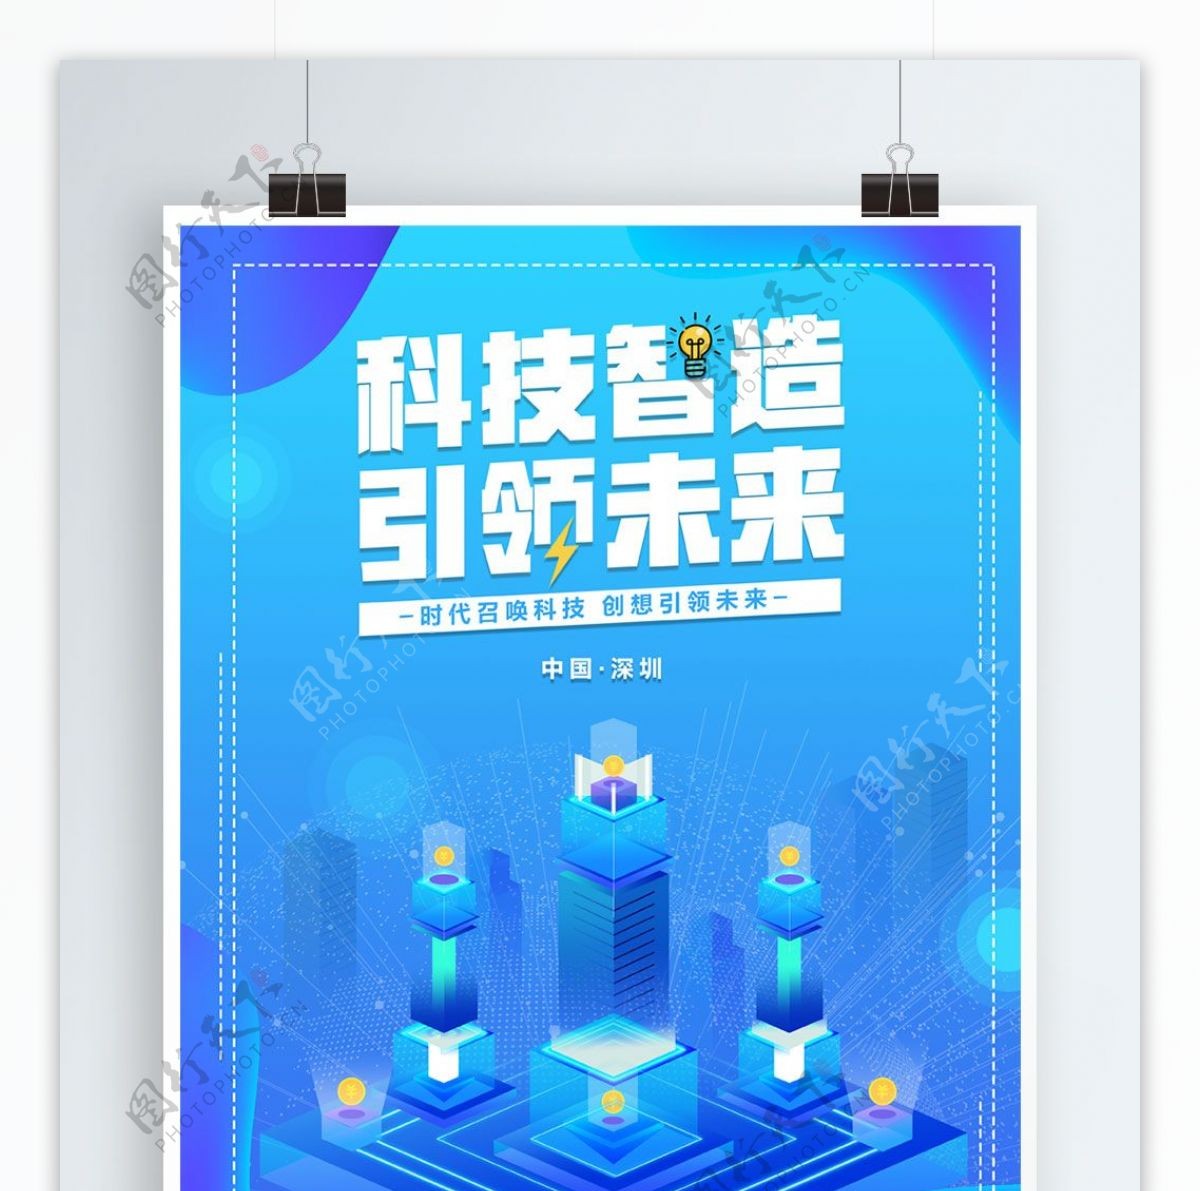 2.5D蓝色科技宣传海报设计